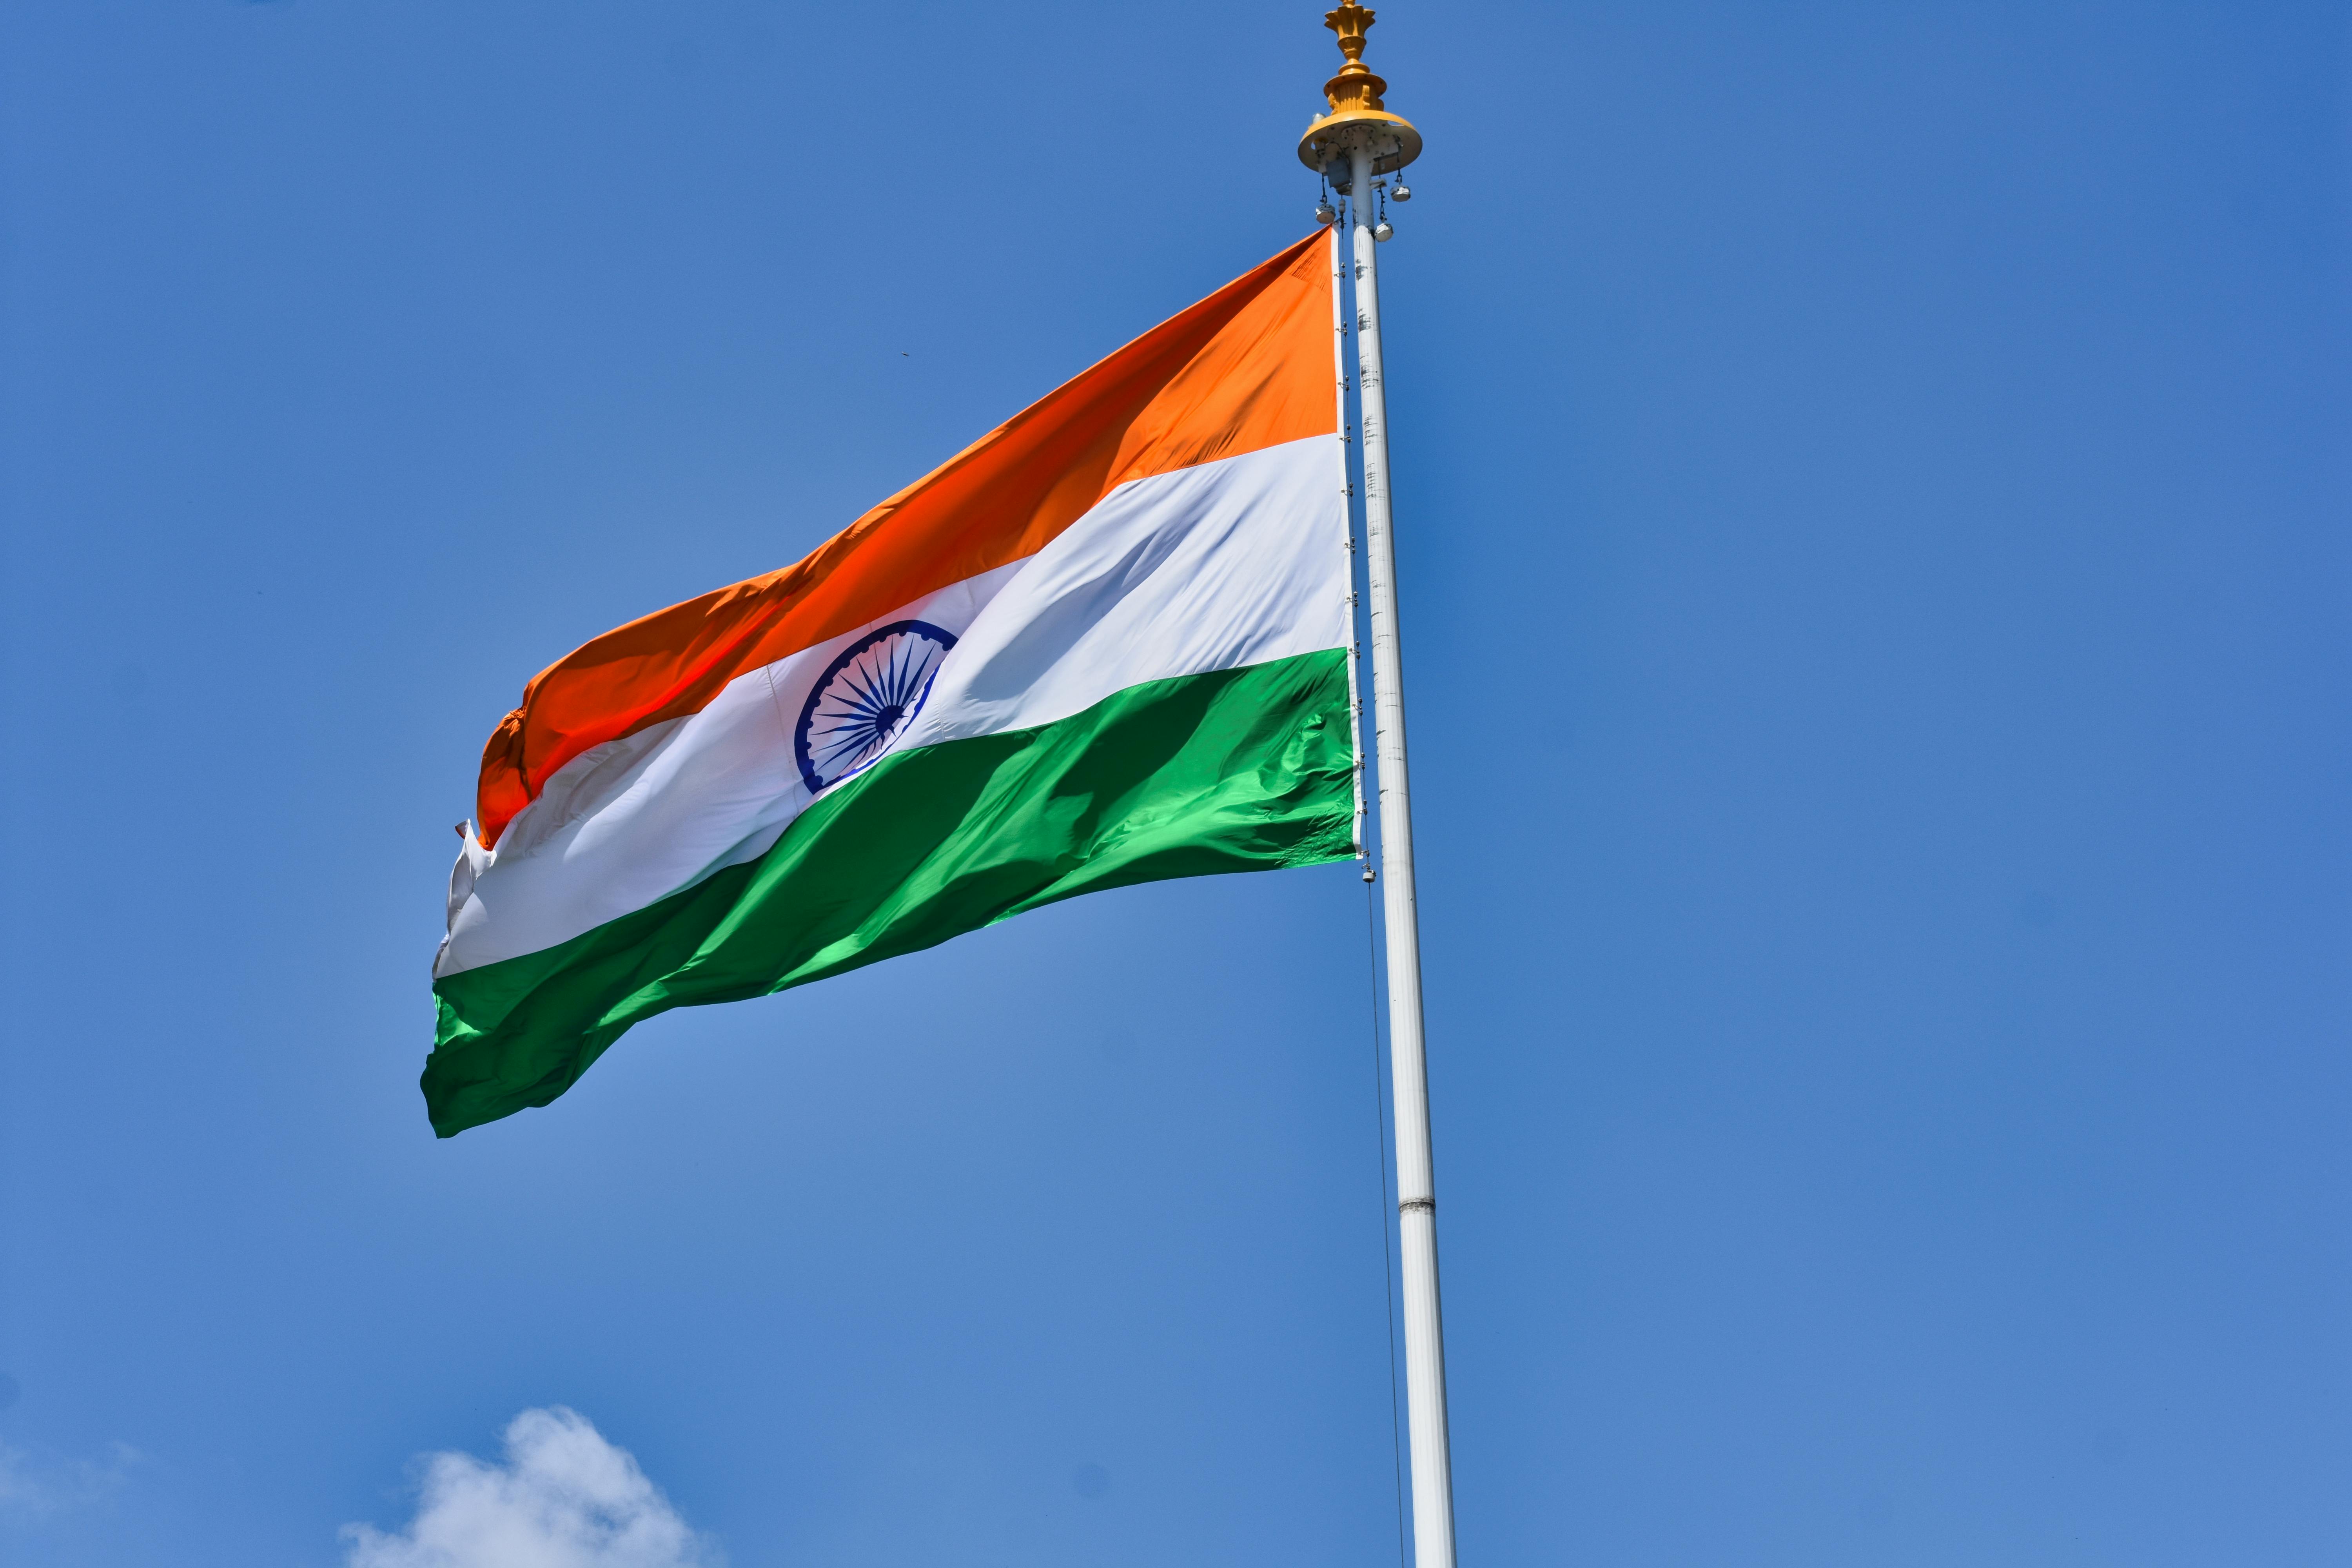 350 Indian Flag Pictures  Download Free Images on Unsplash